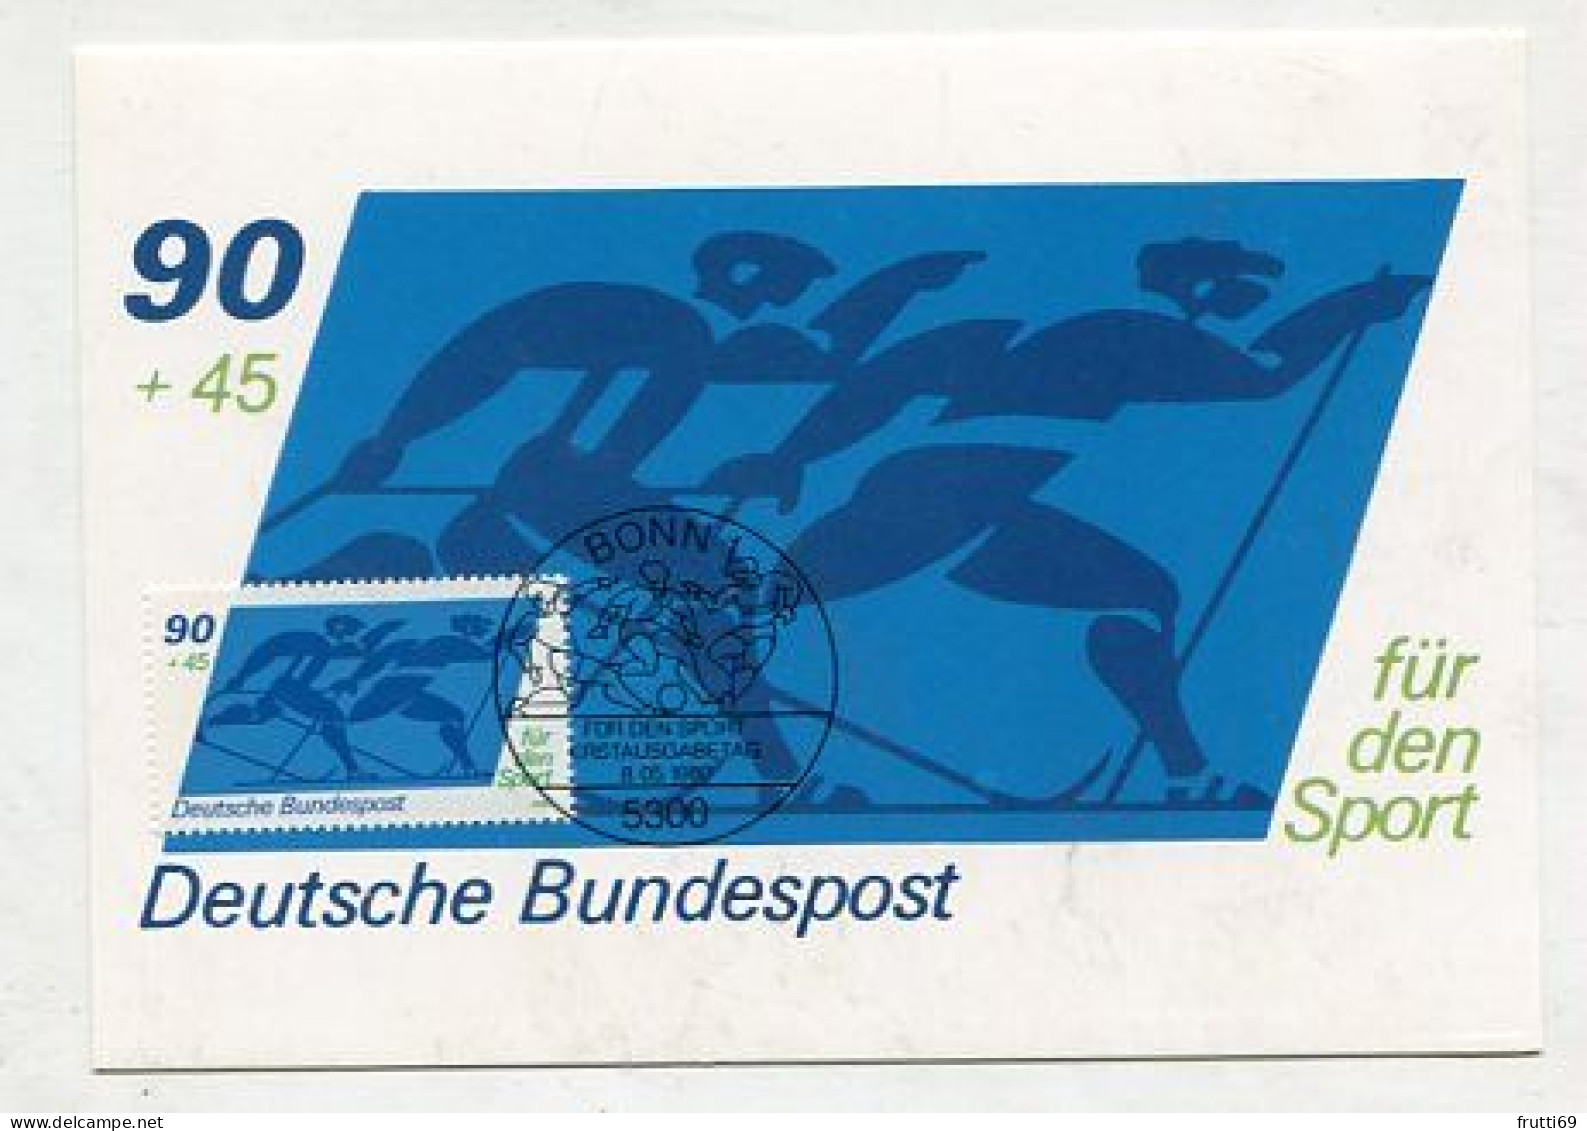 MC 211845 GERMANY - 1980 - Für Den Sport - Ski-Langlauf - 1961-1980